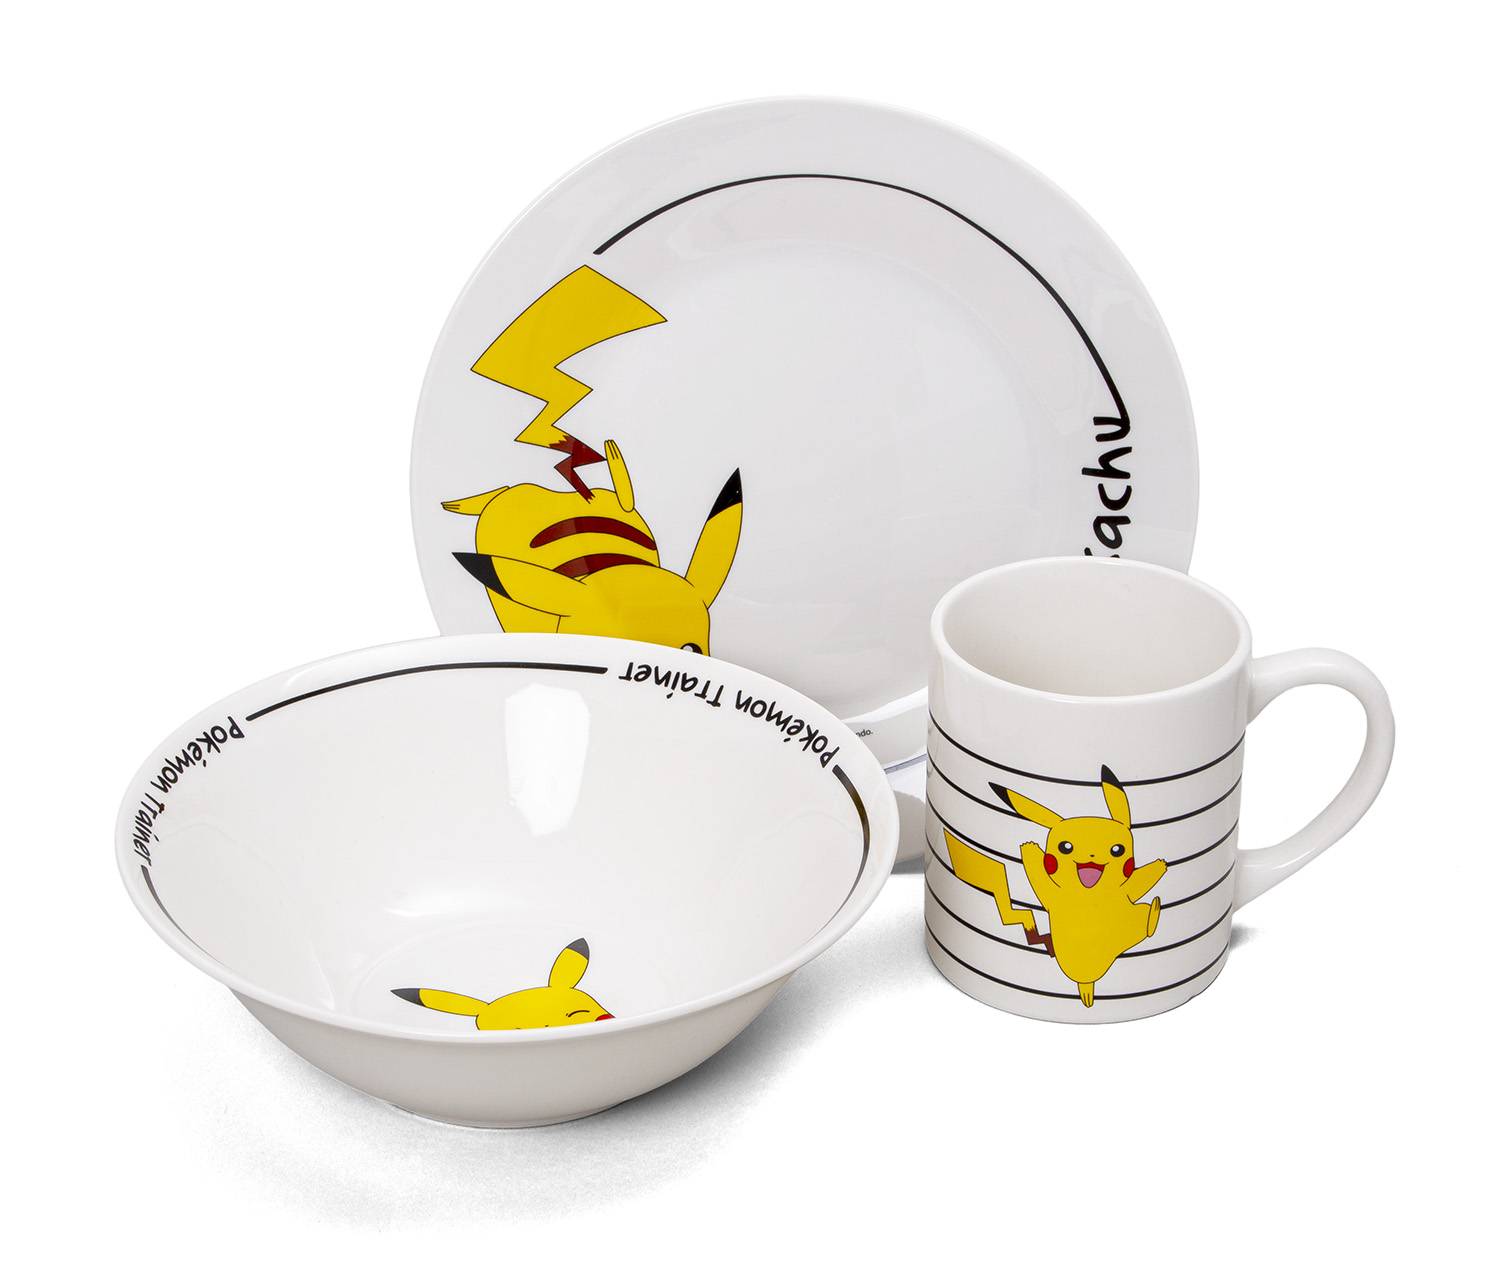 Teller, - Tasse) - Pokémon Pikachu (Schale, Frühstücksset